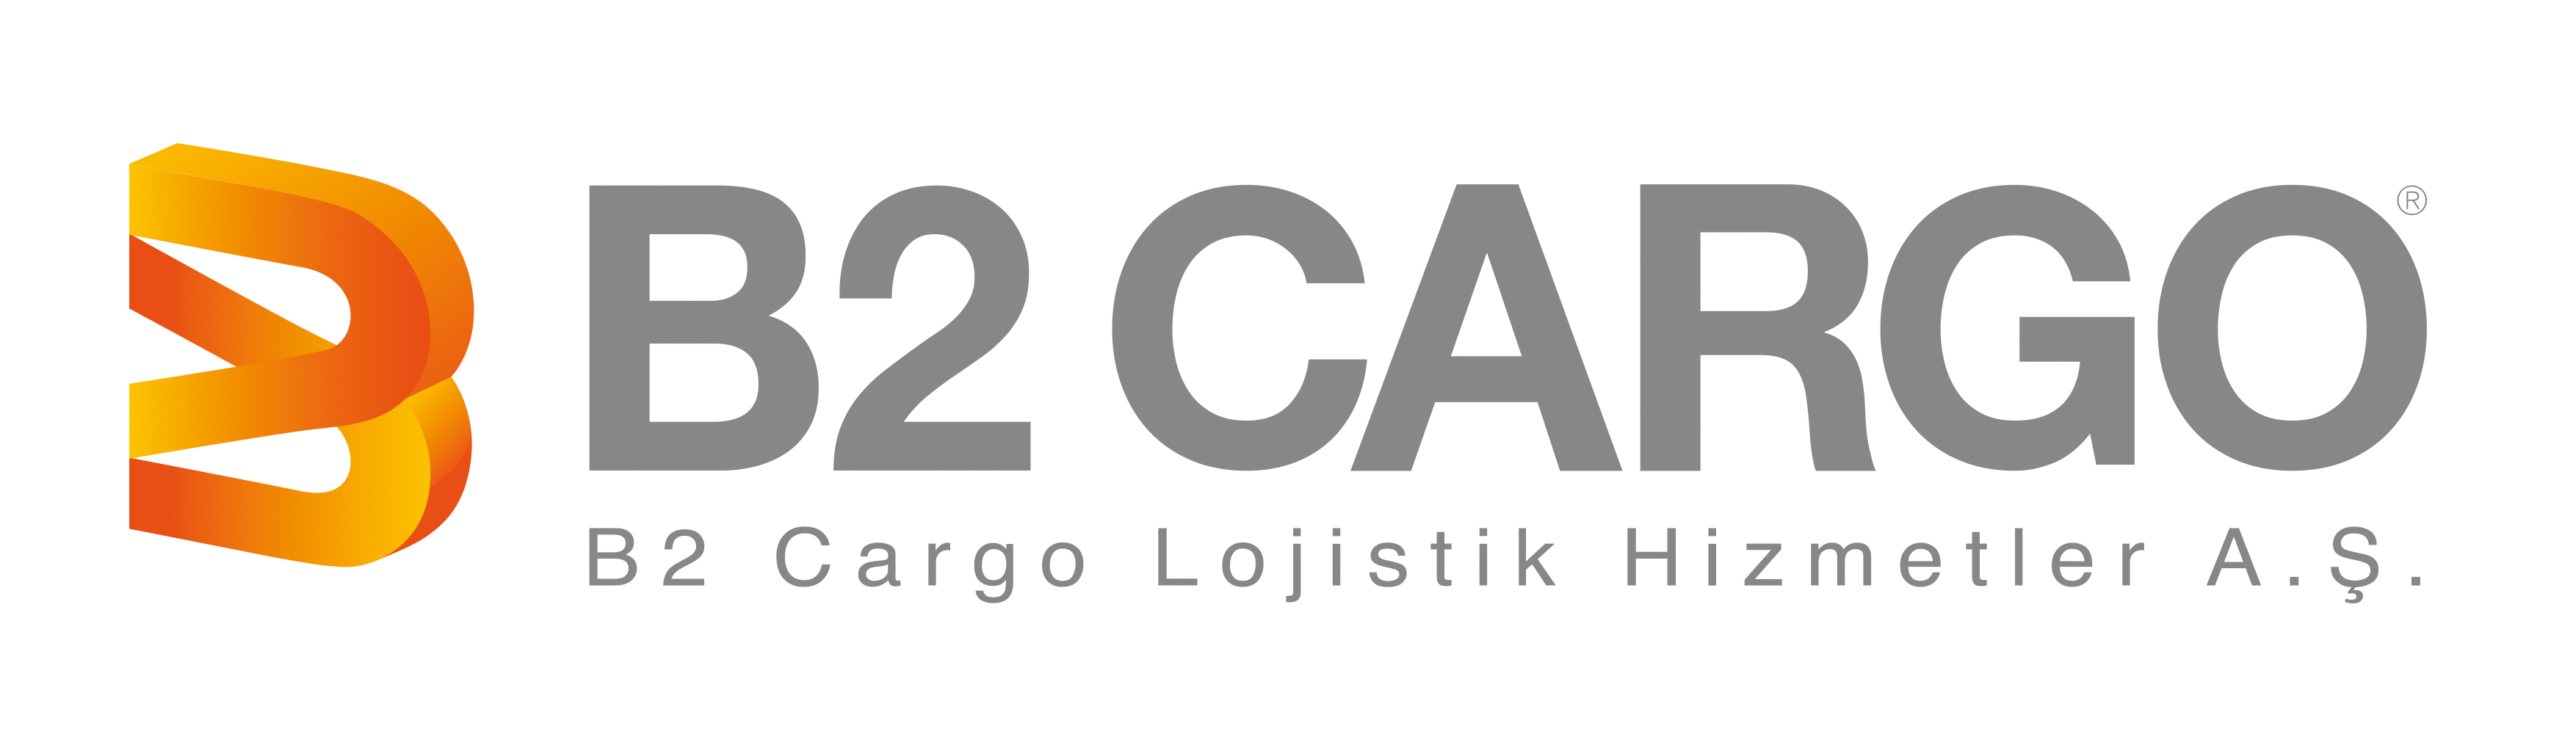 B2 Cargo